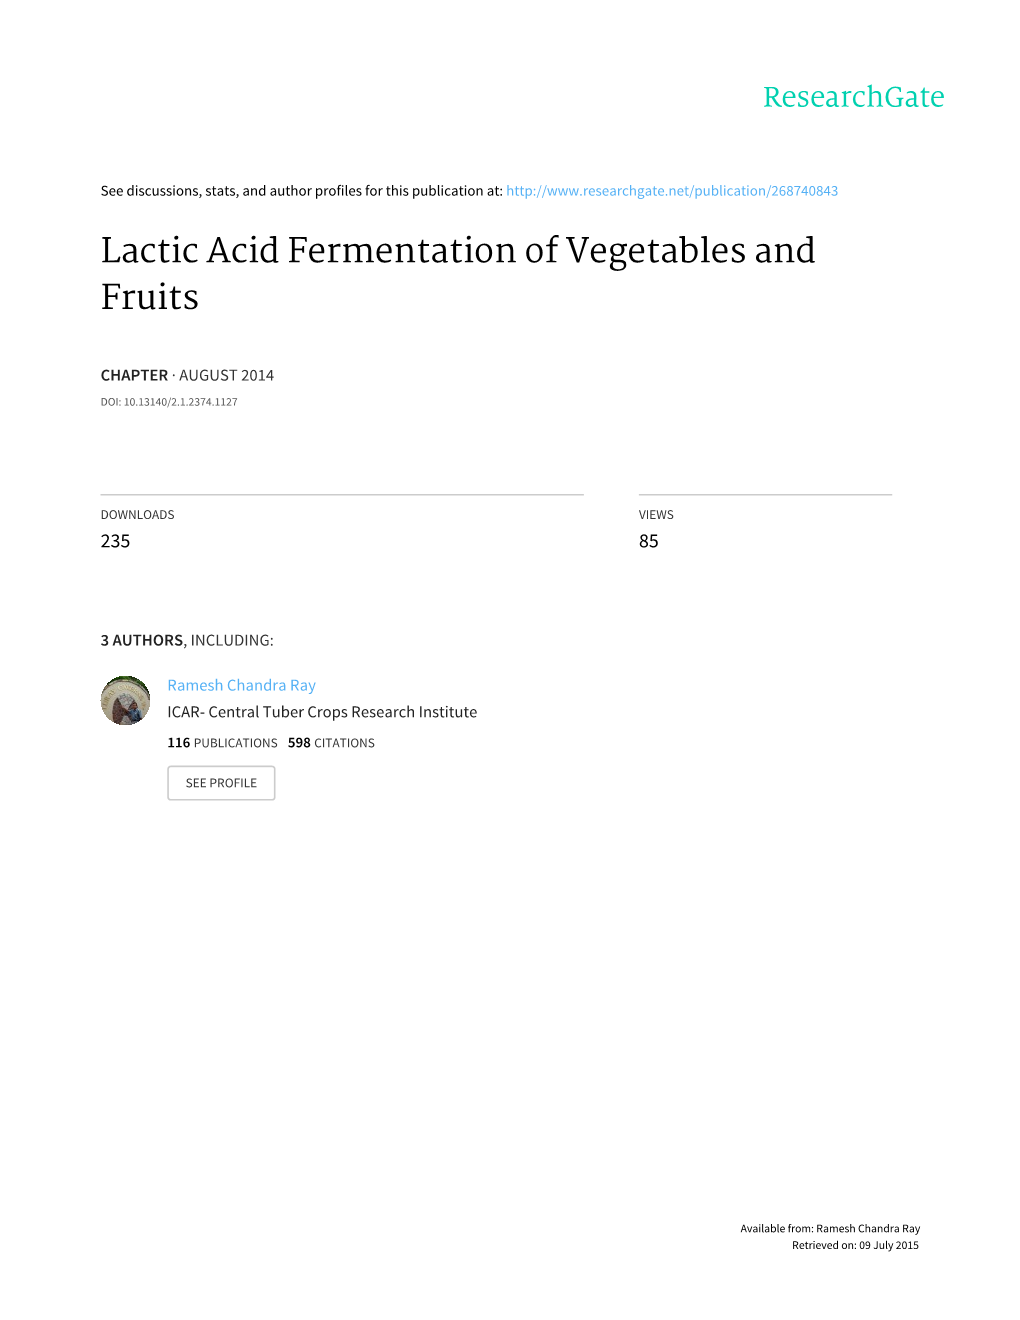 Lactic Acid Fermentation of Vegetables and Fruits